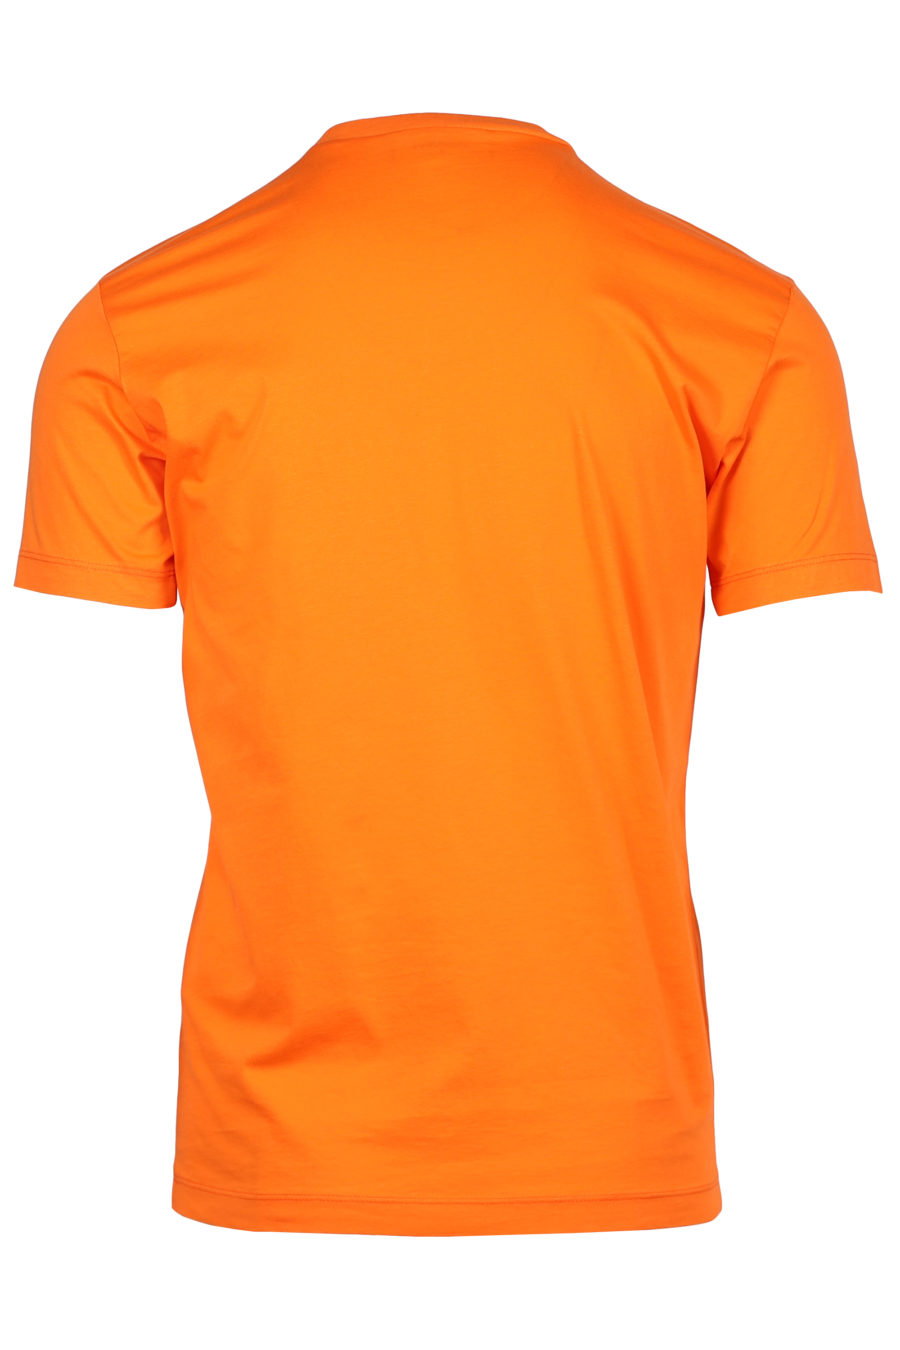 Camiseta naranja con logo "Icon" vertical” - IMG 2321